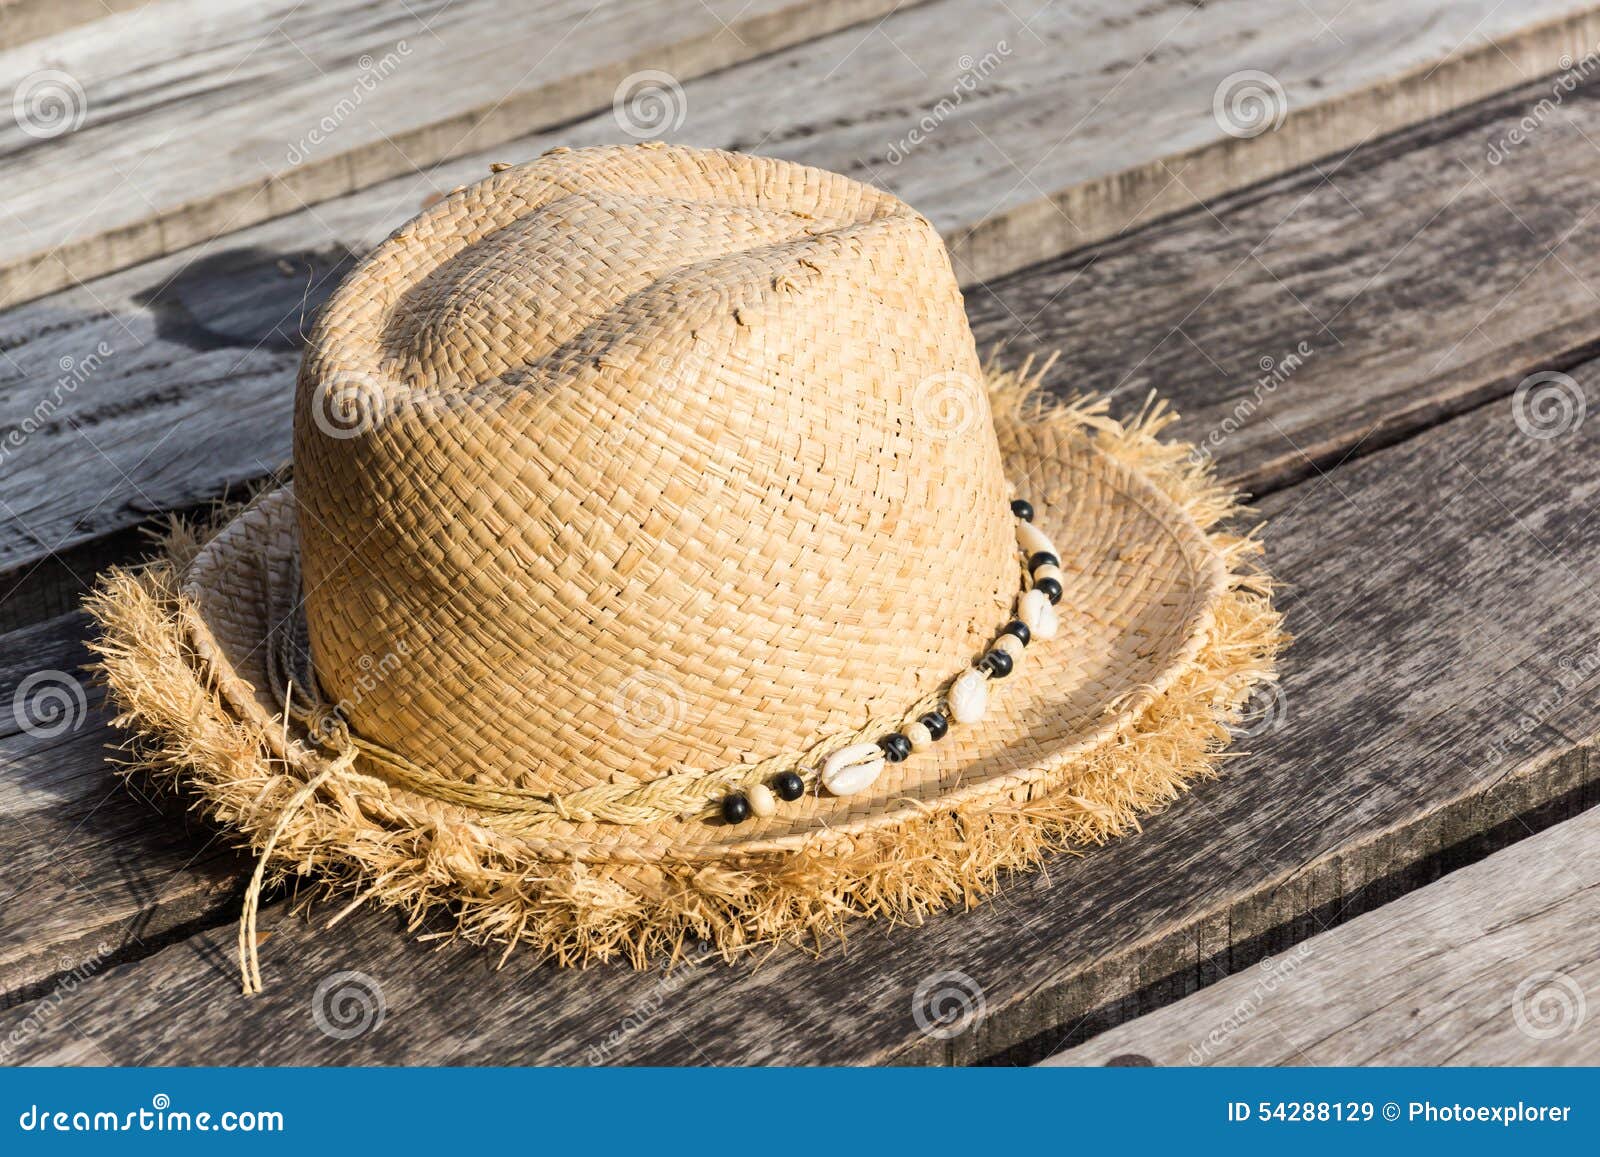 Hat on wood ground stock image. Image of style, travel - 54288129